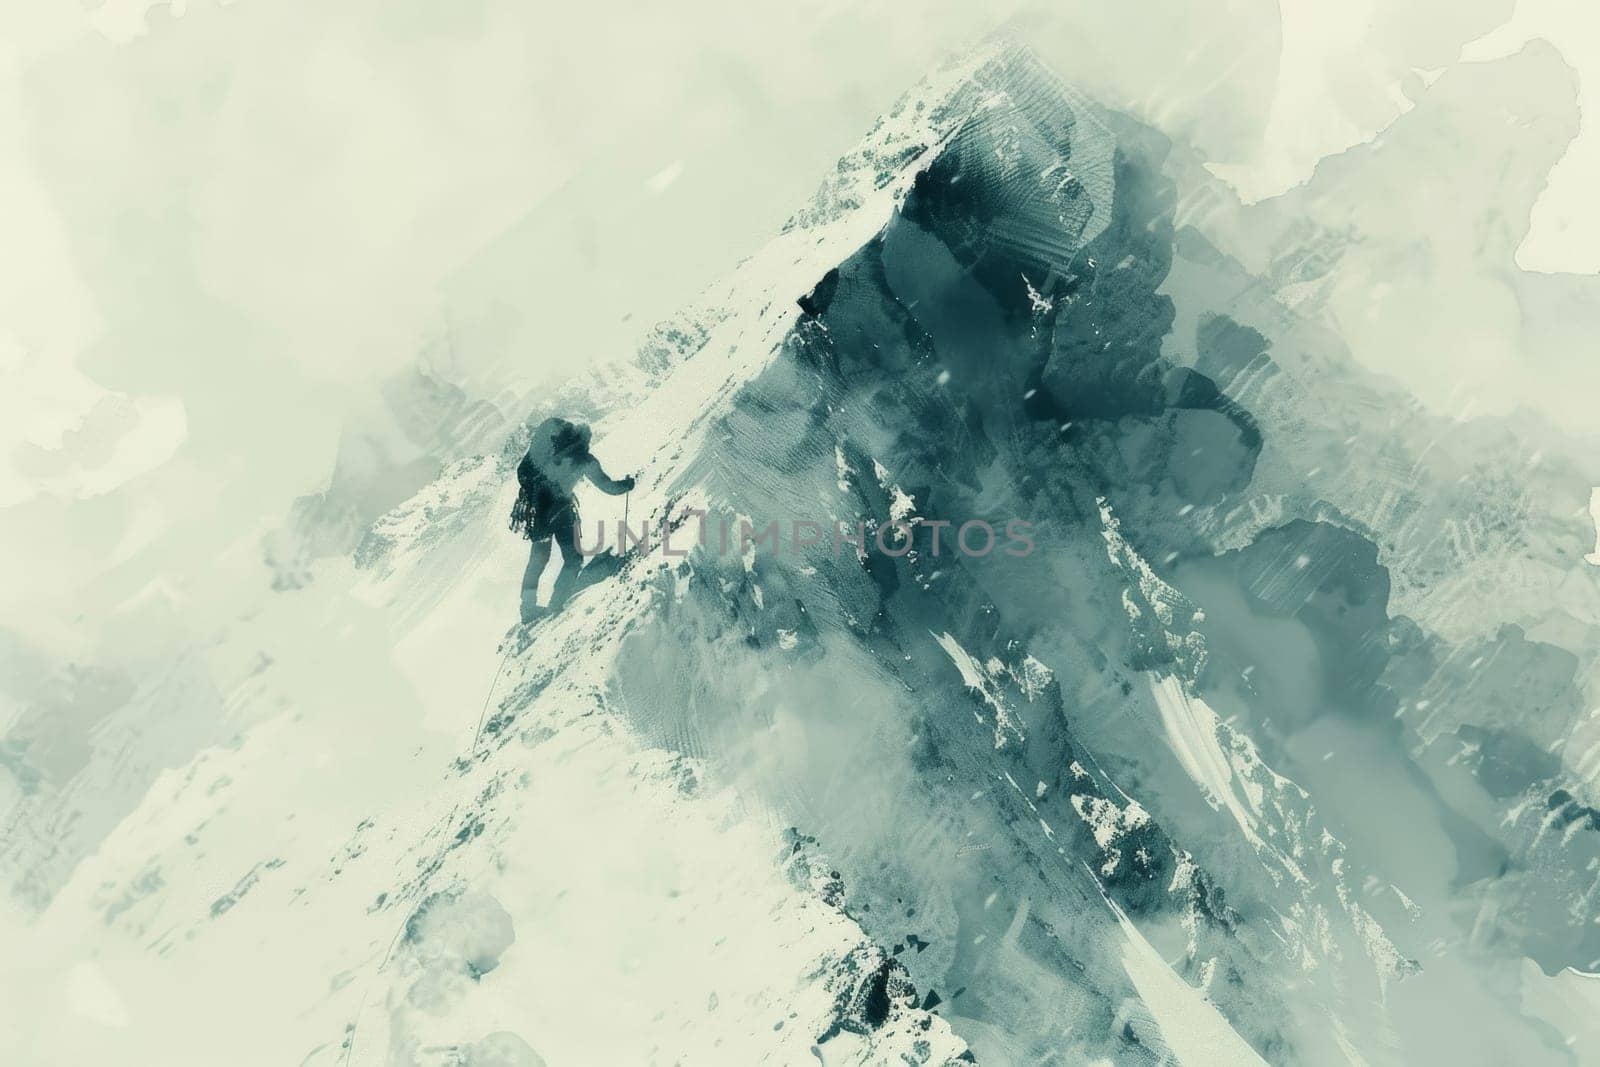 Abstract Climber on Snowy Ridge by andreyz